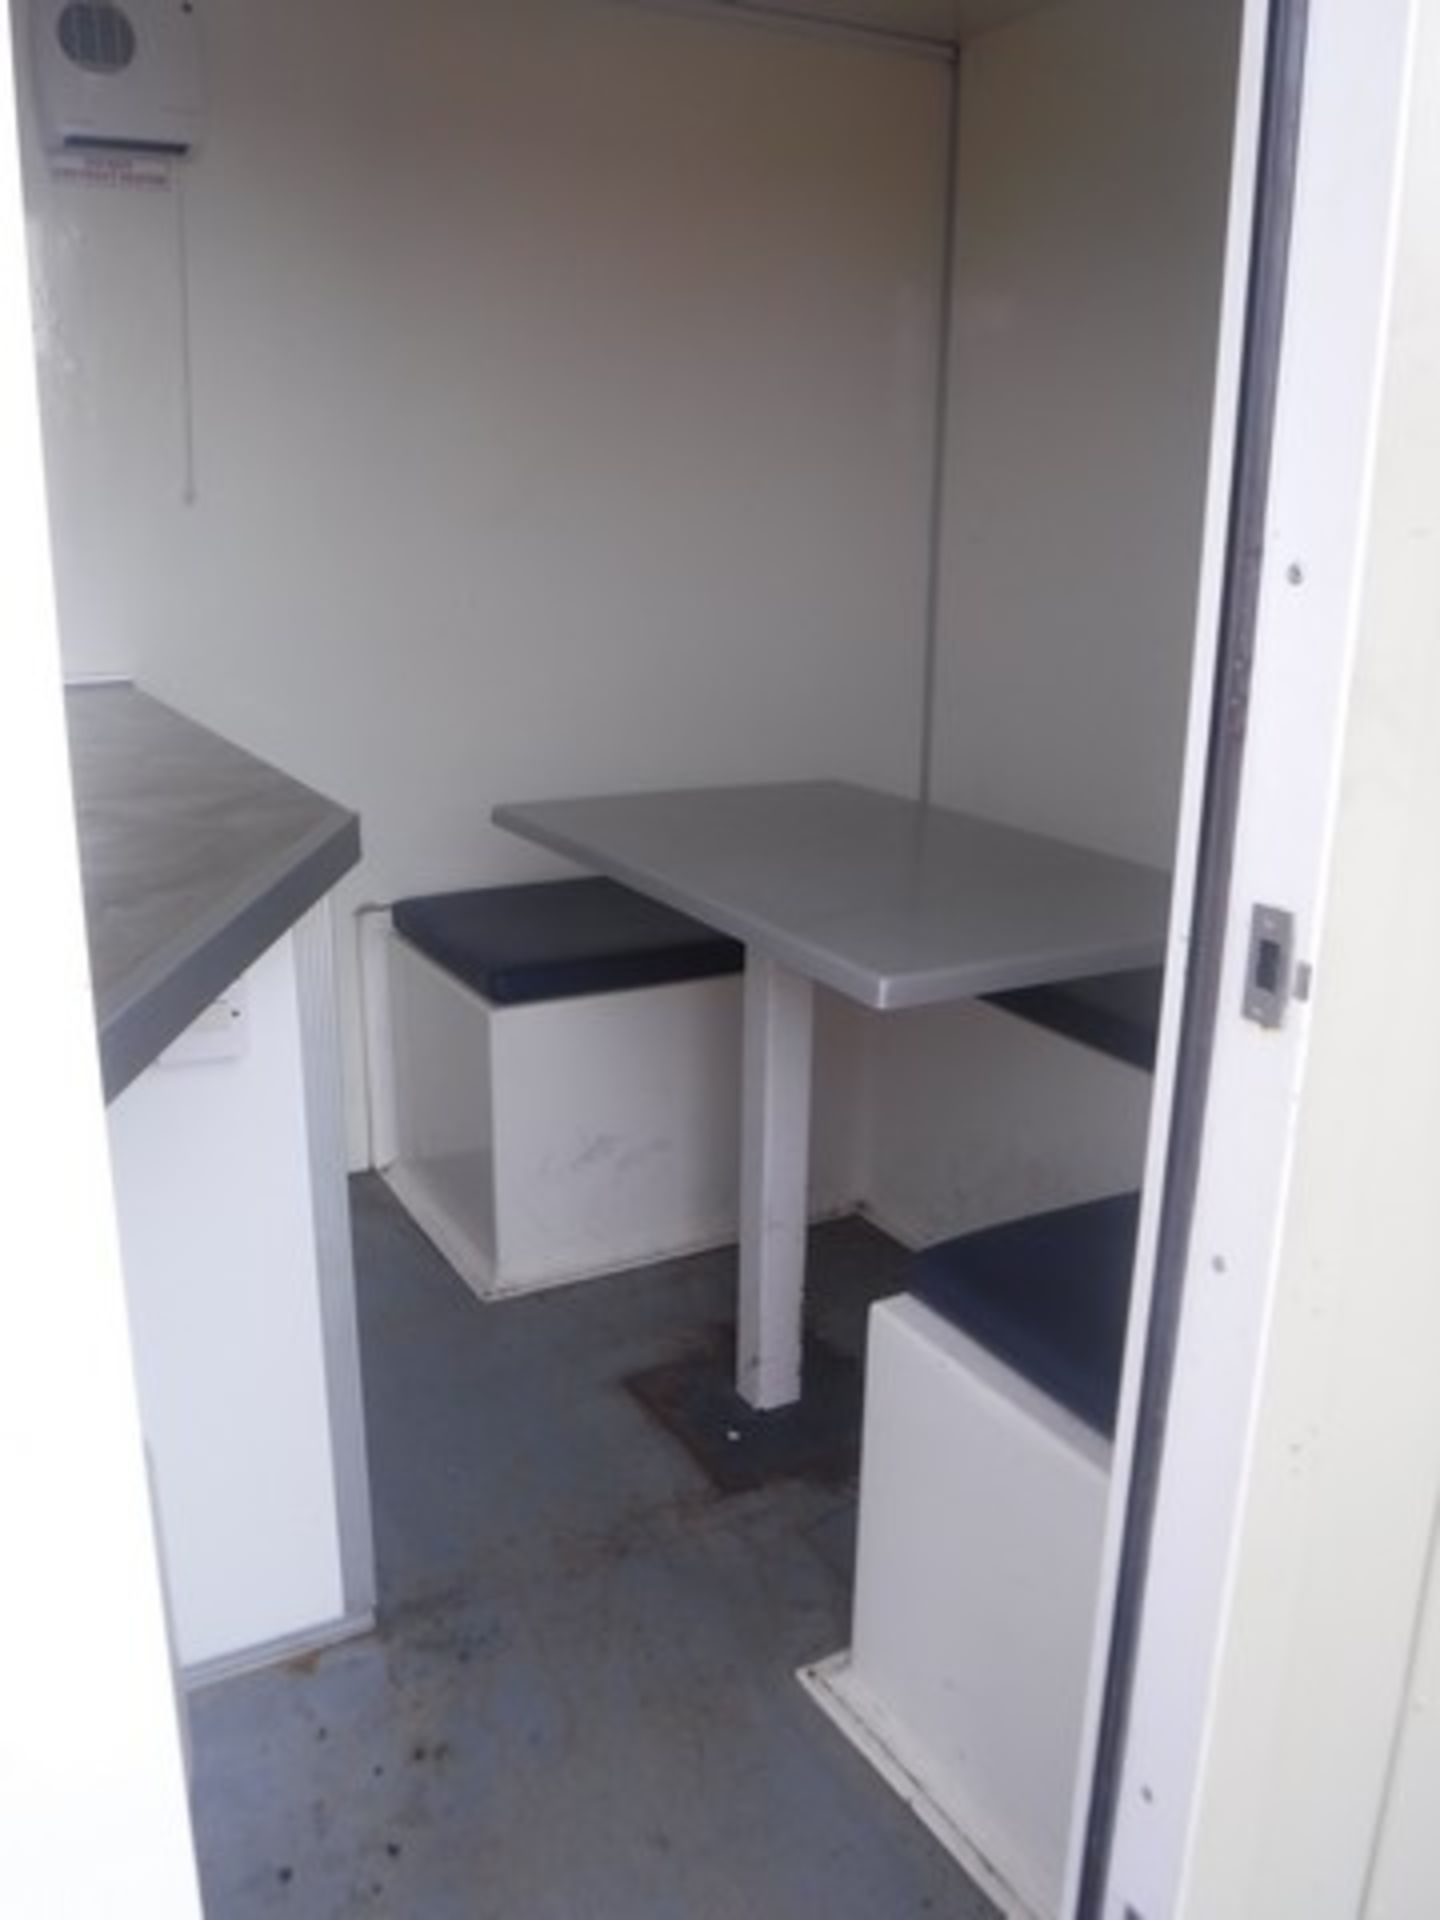 12 x 8 TOWABLE welfare cabin. Onboard generator, kitchen facilities, toilet & drying room. S/N SSM10 - Image 4 of 22